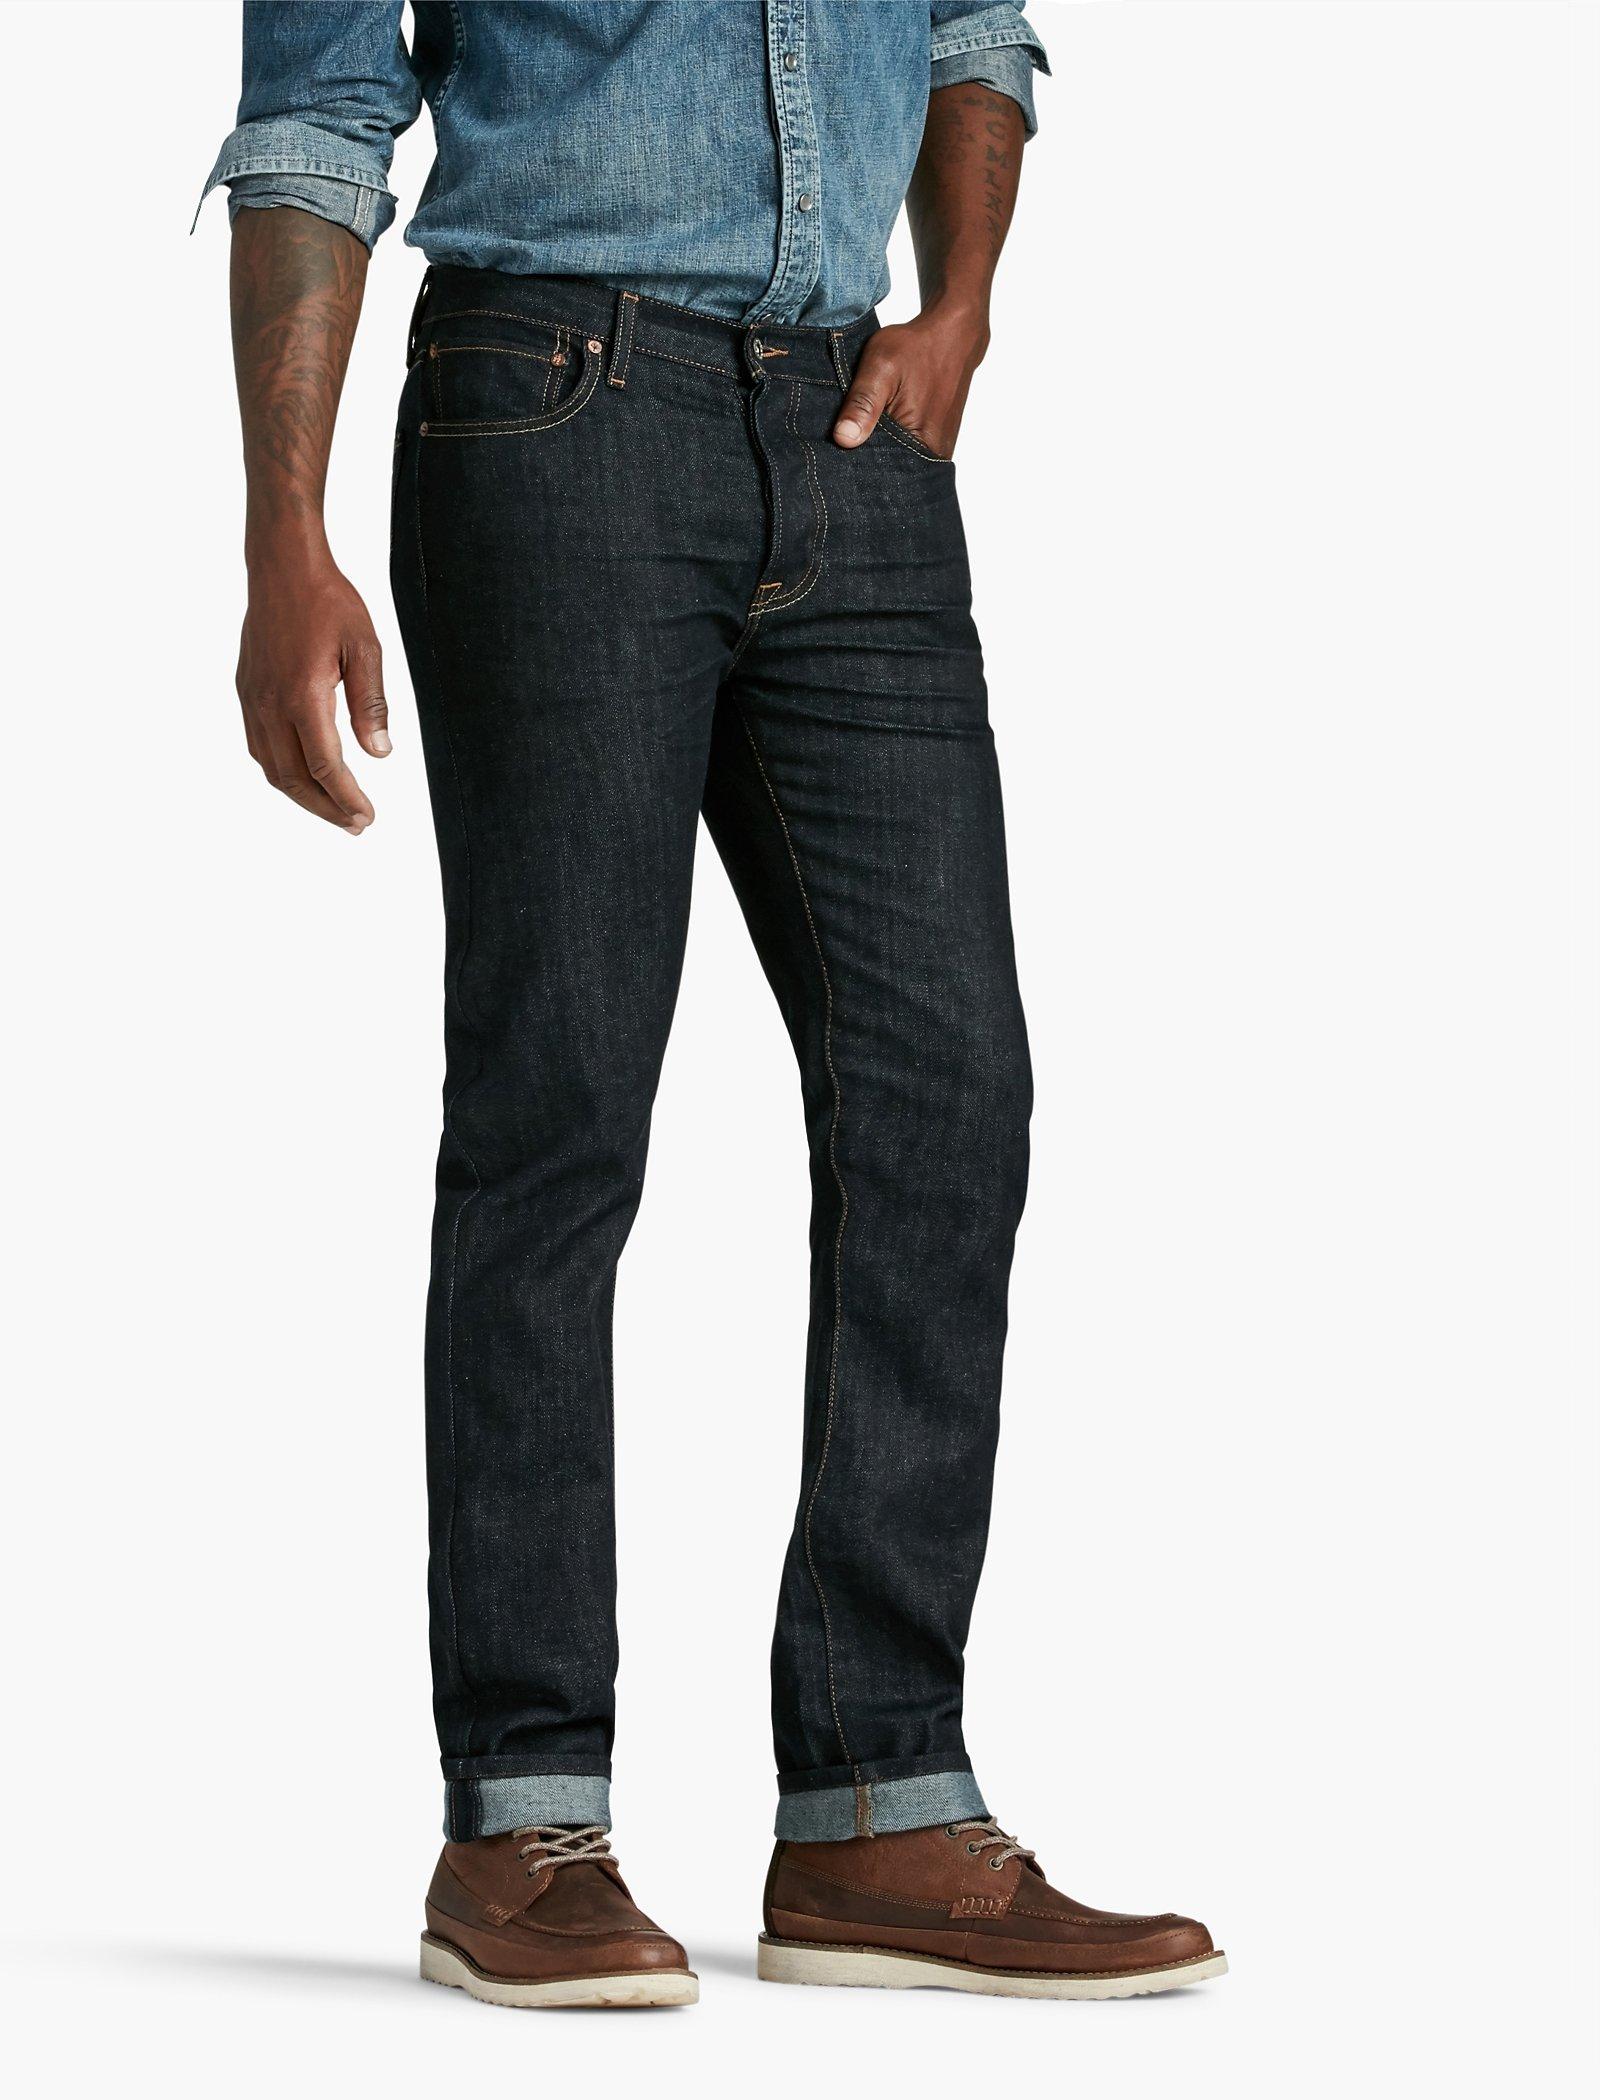 black jeans size 18